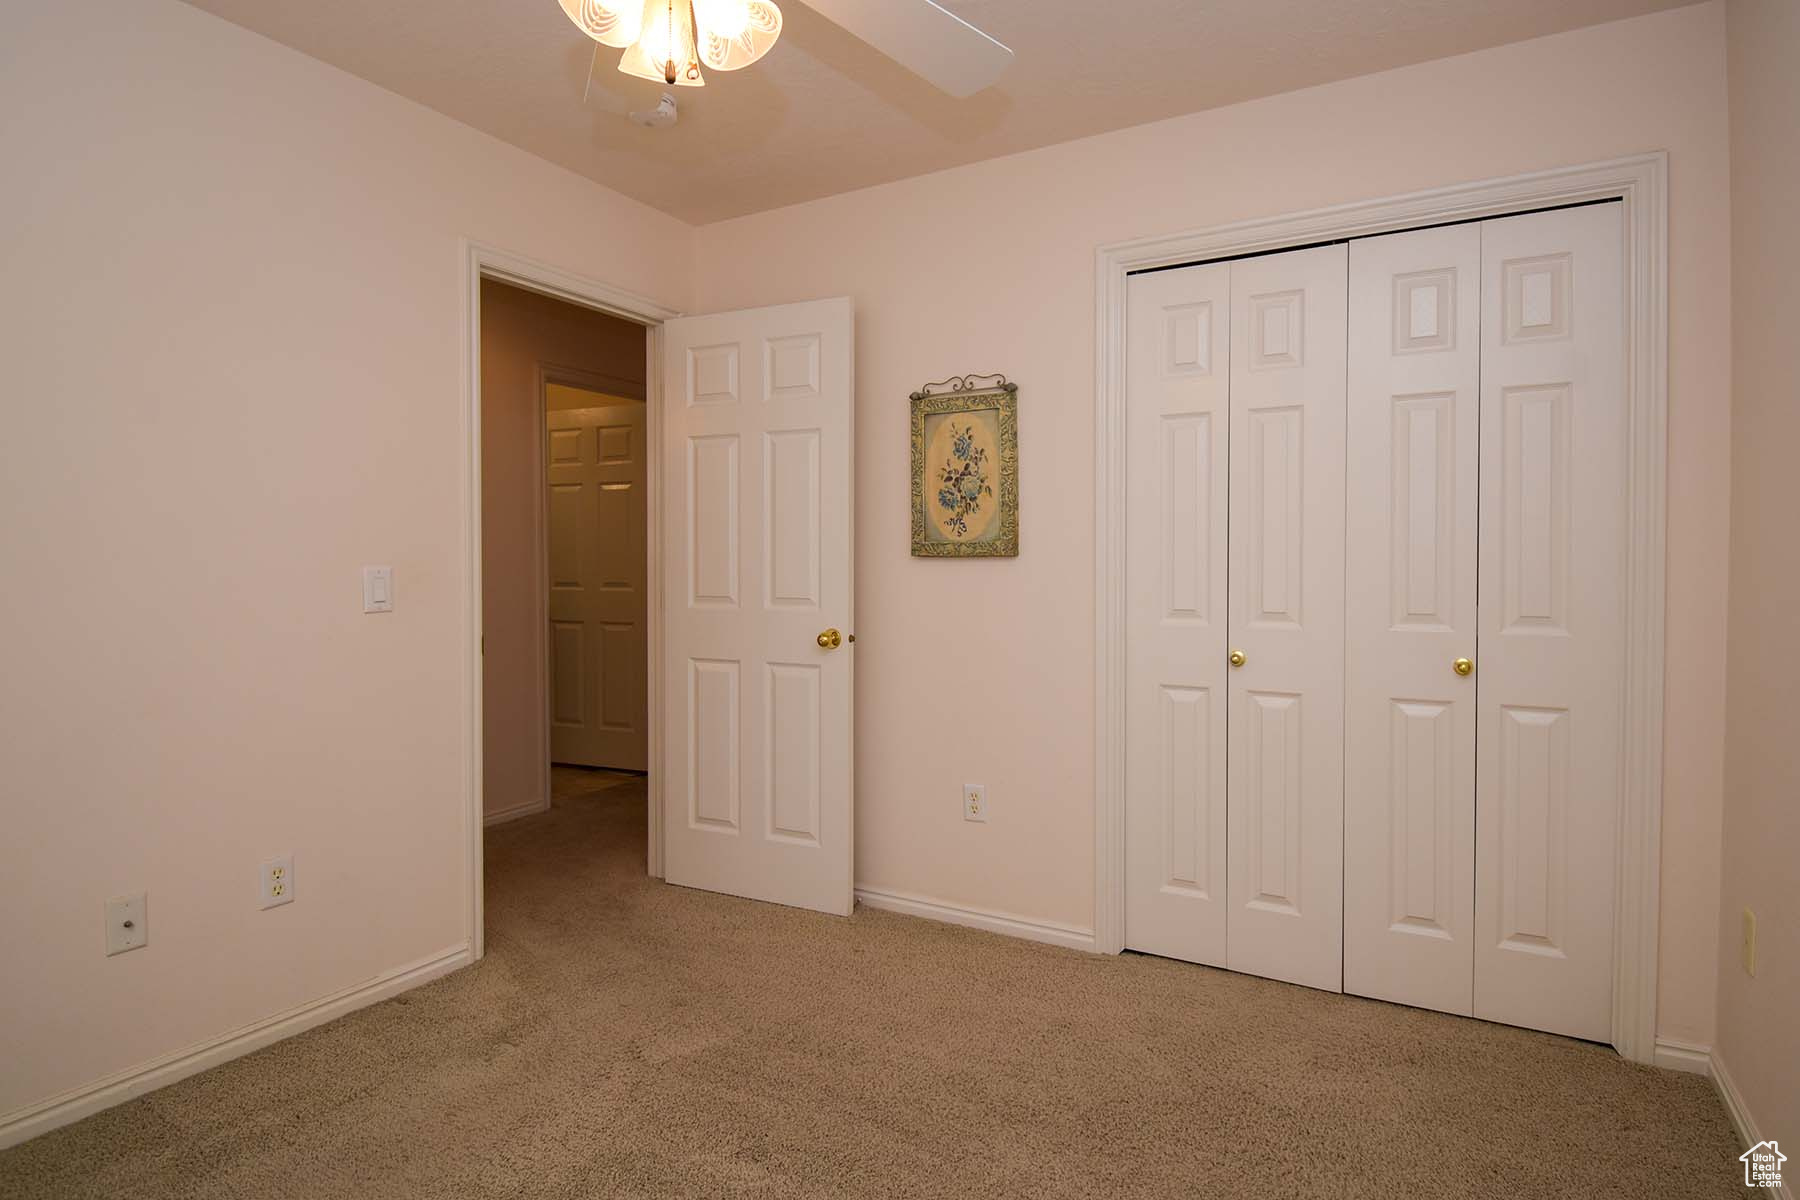 Guest bedroom with a closet, light carpet